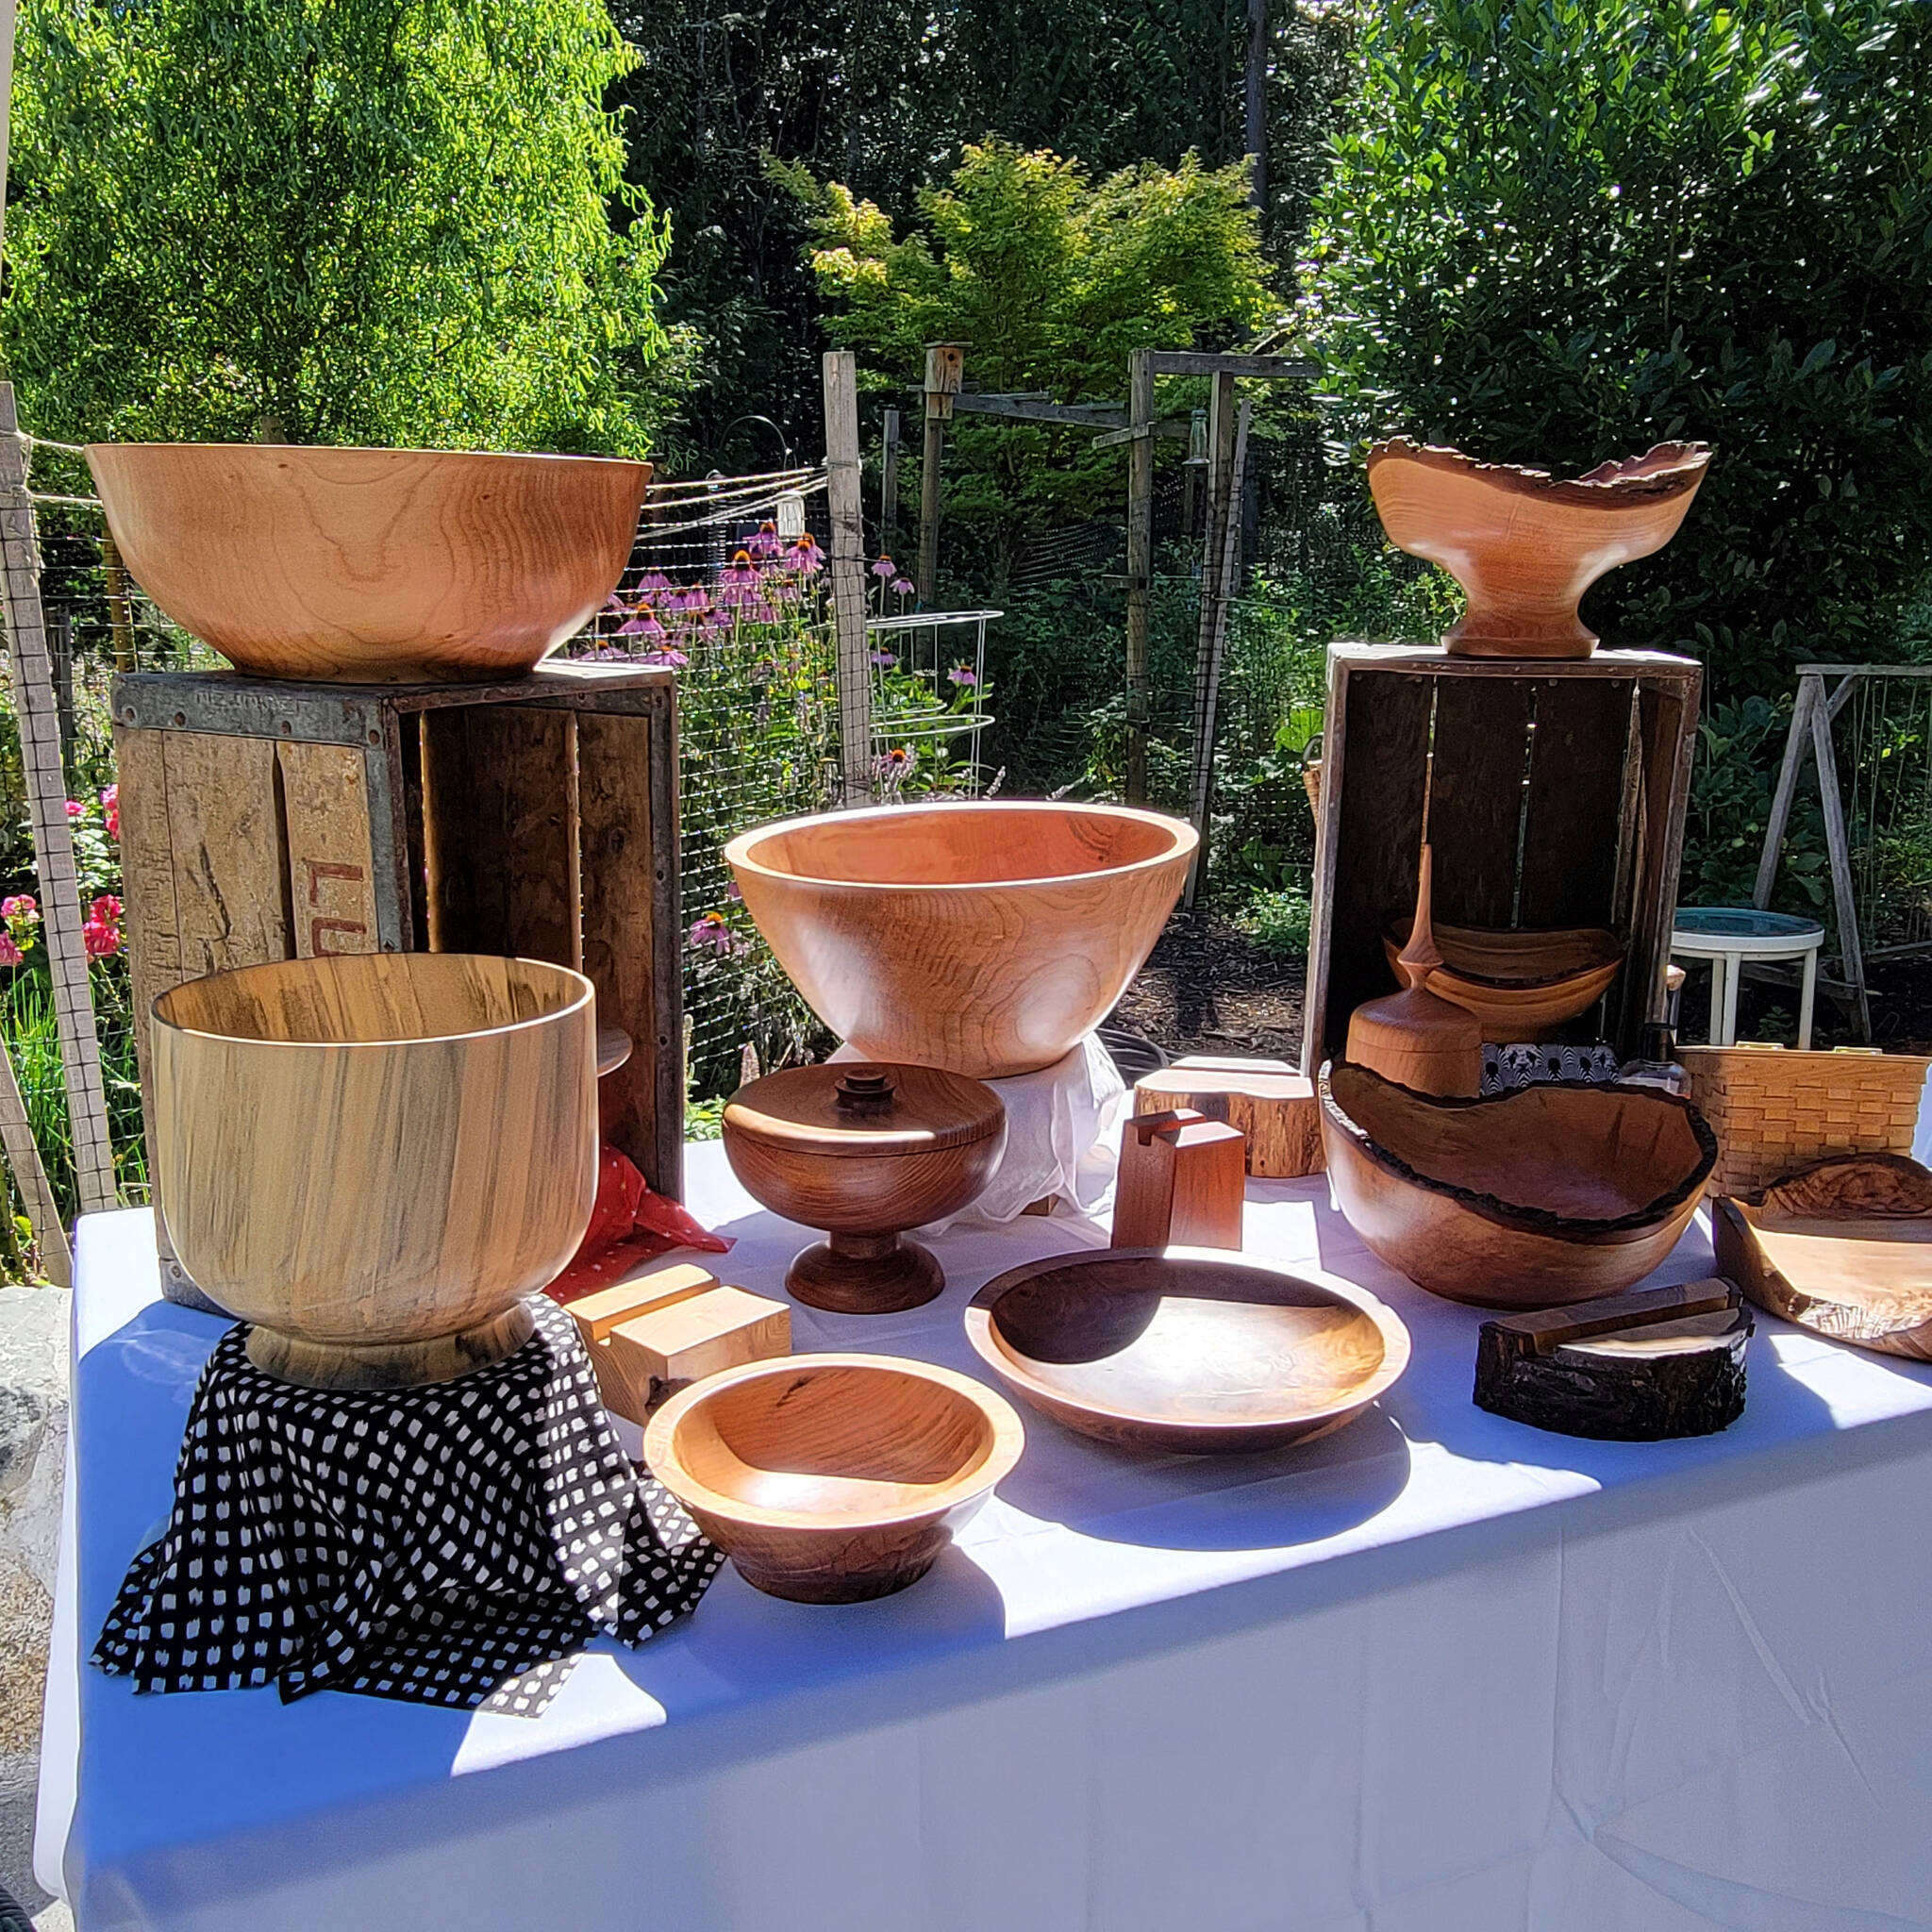 Wooden bowls and plates on display at the Bainbridge Island Studio Tour.